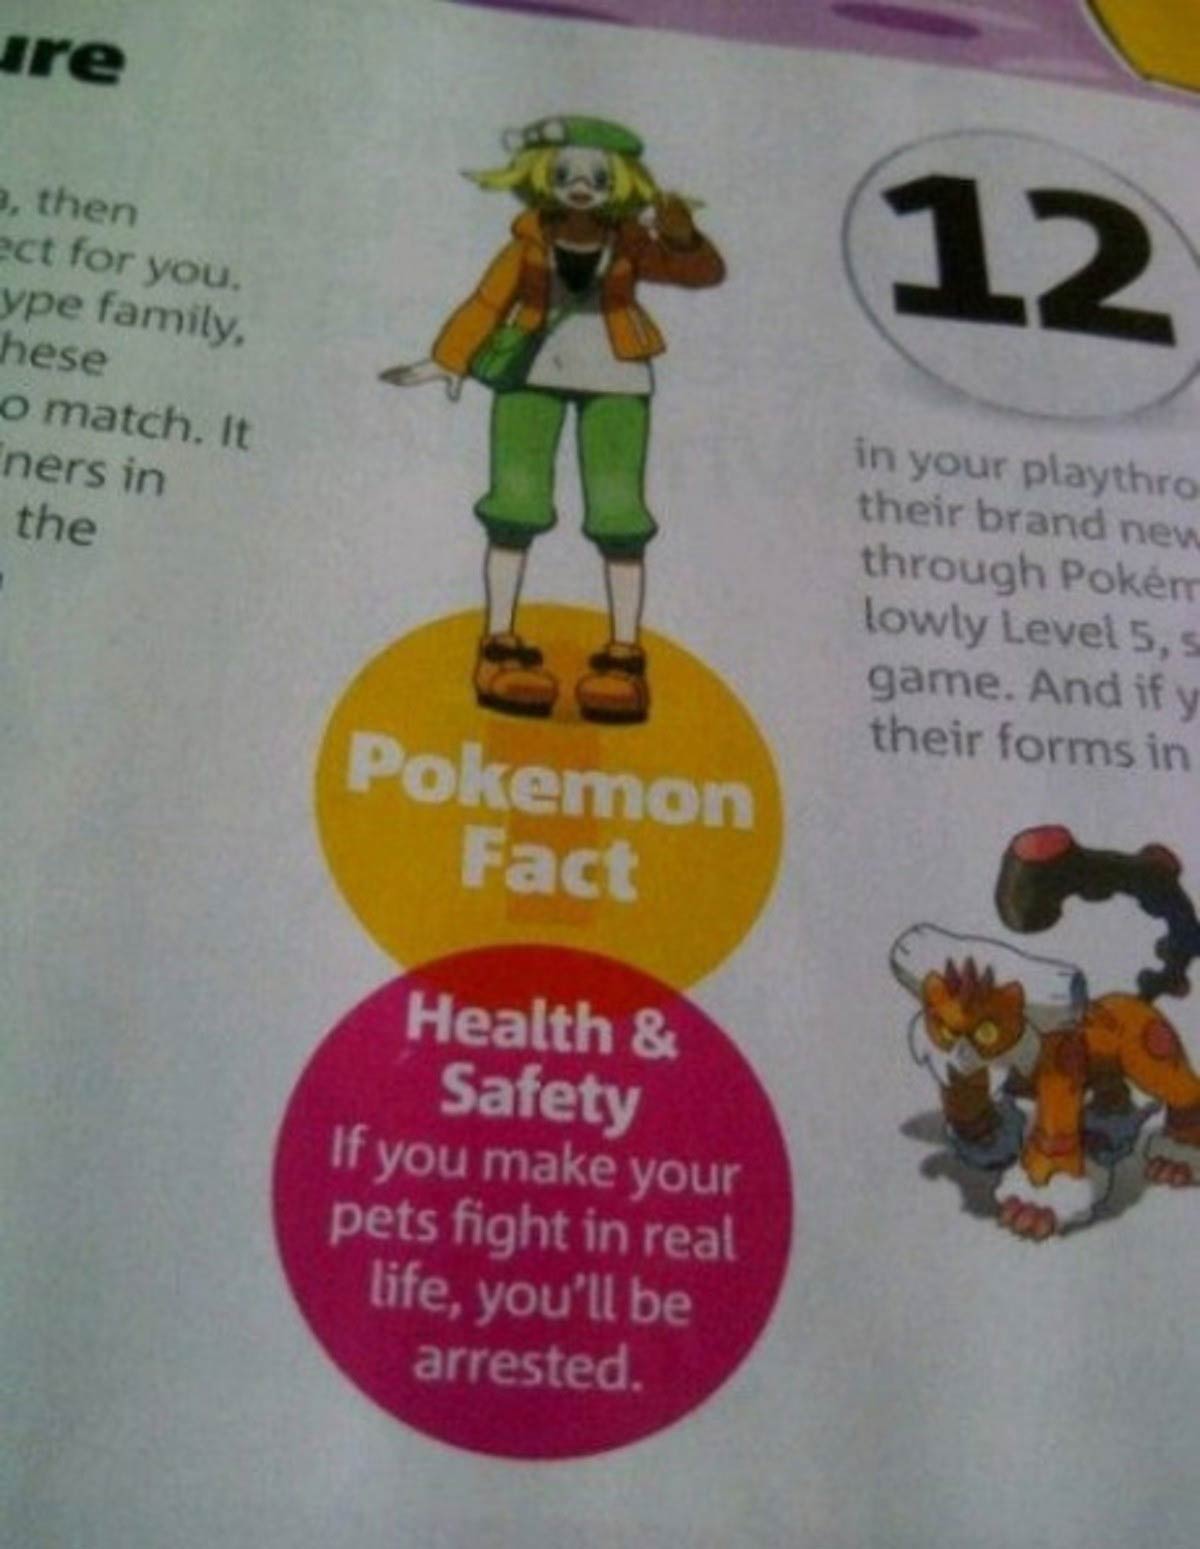 Fun Pokemon facts